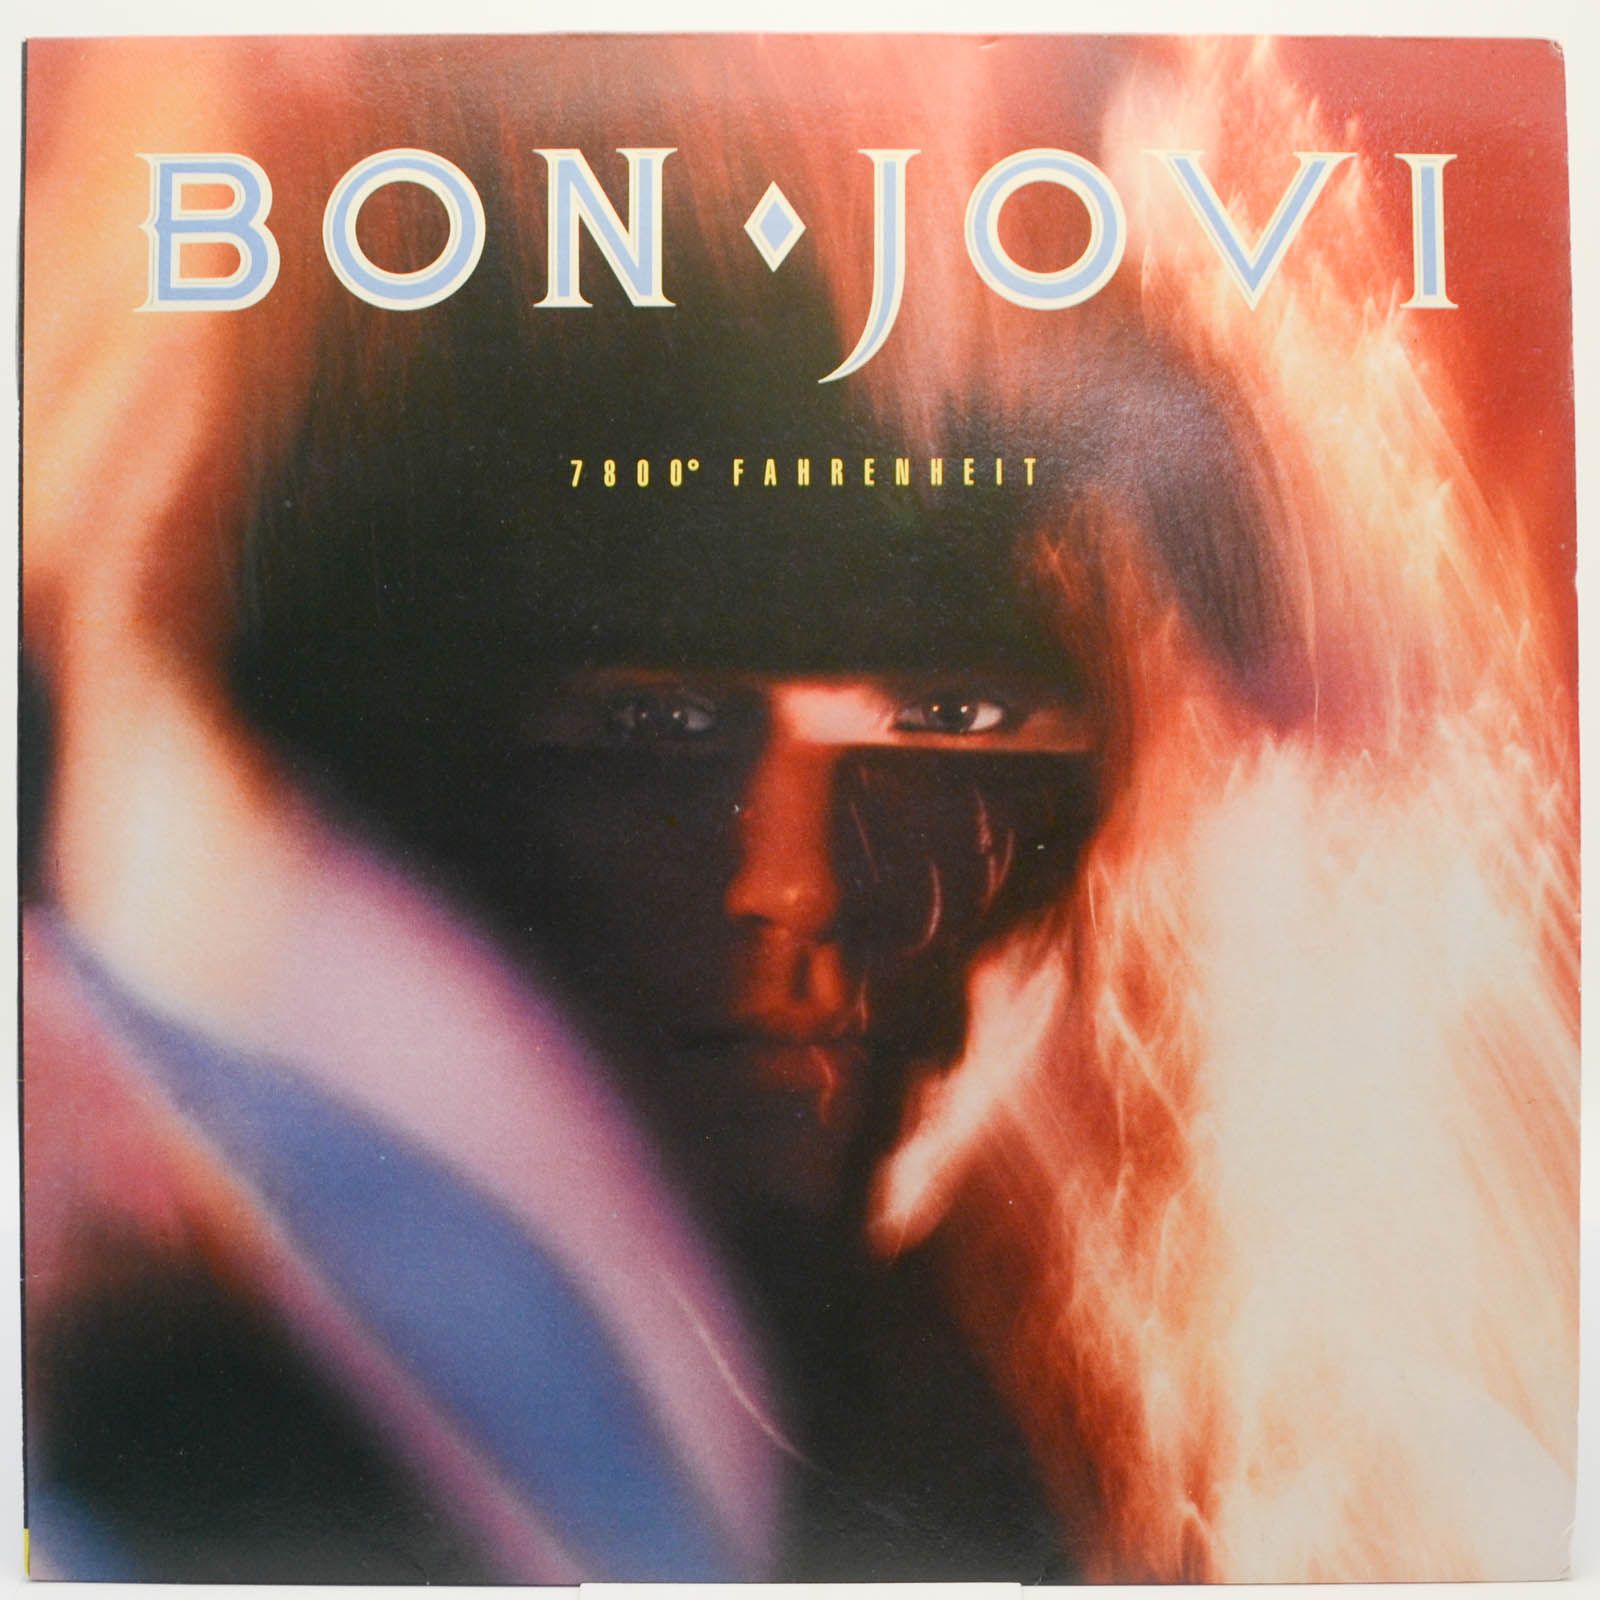 Bon Jovi — 7800° Fahrenheit (UK), 1985